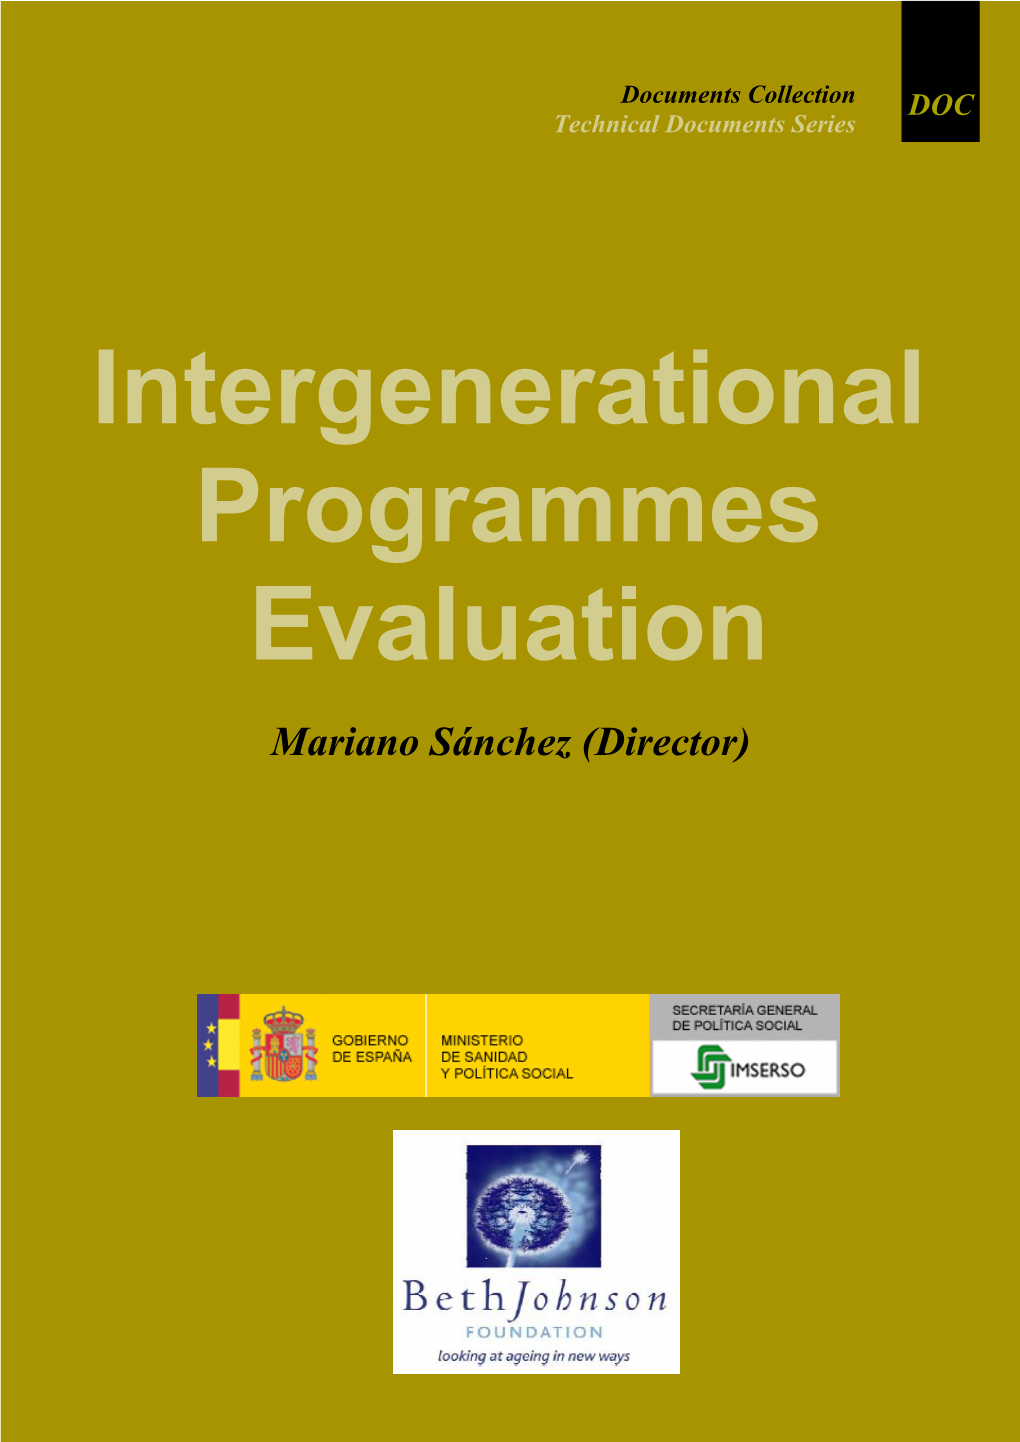 Intergenerational Programmes Evaluation